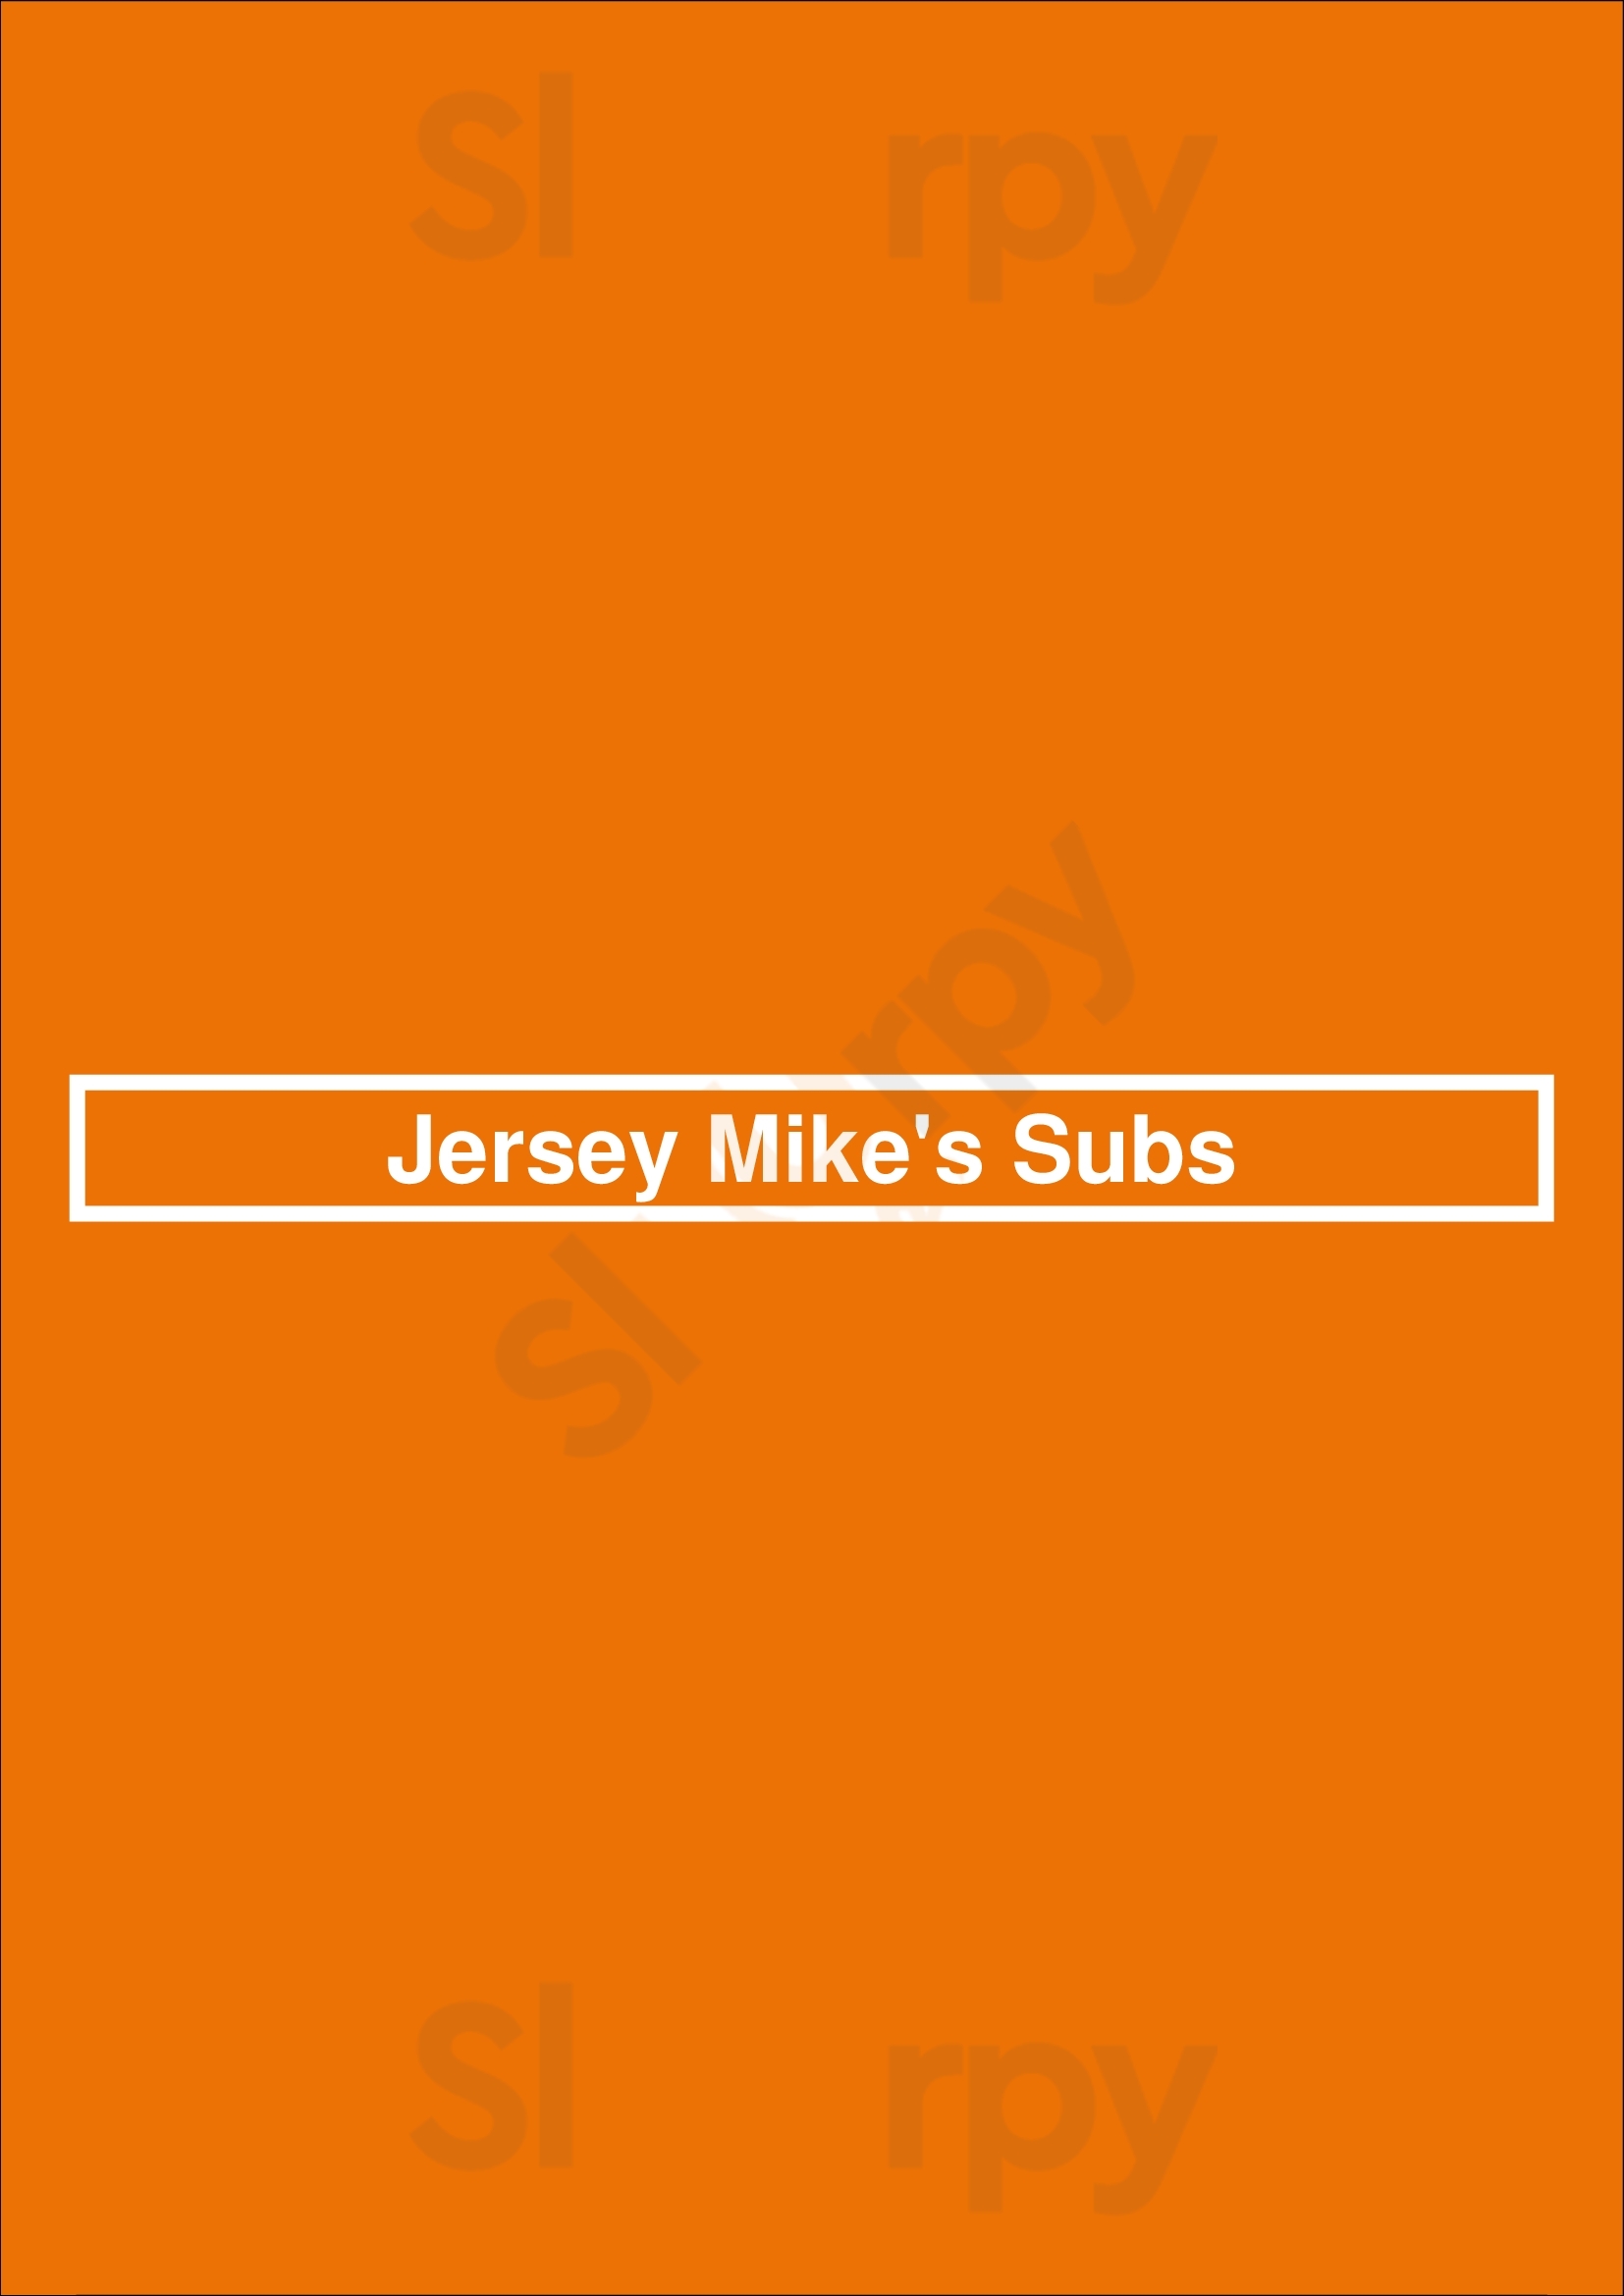 Jersey Mike's Subs London Menu - 1